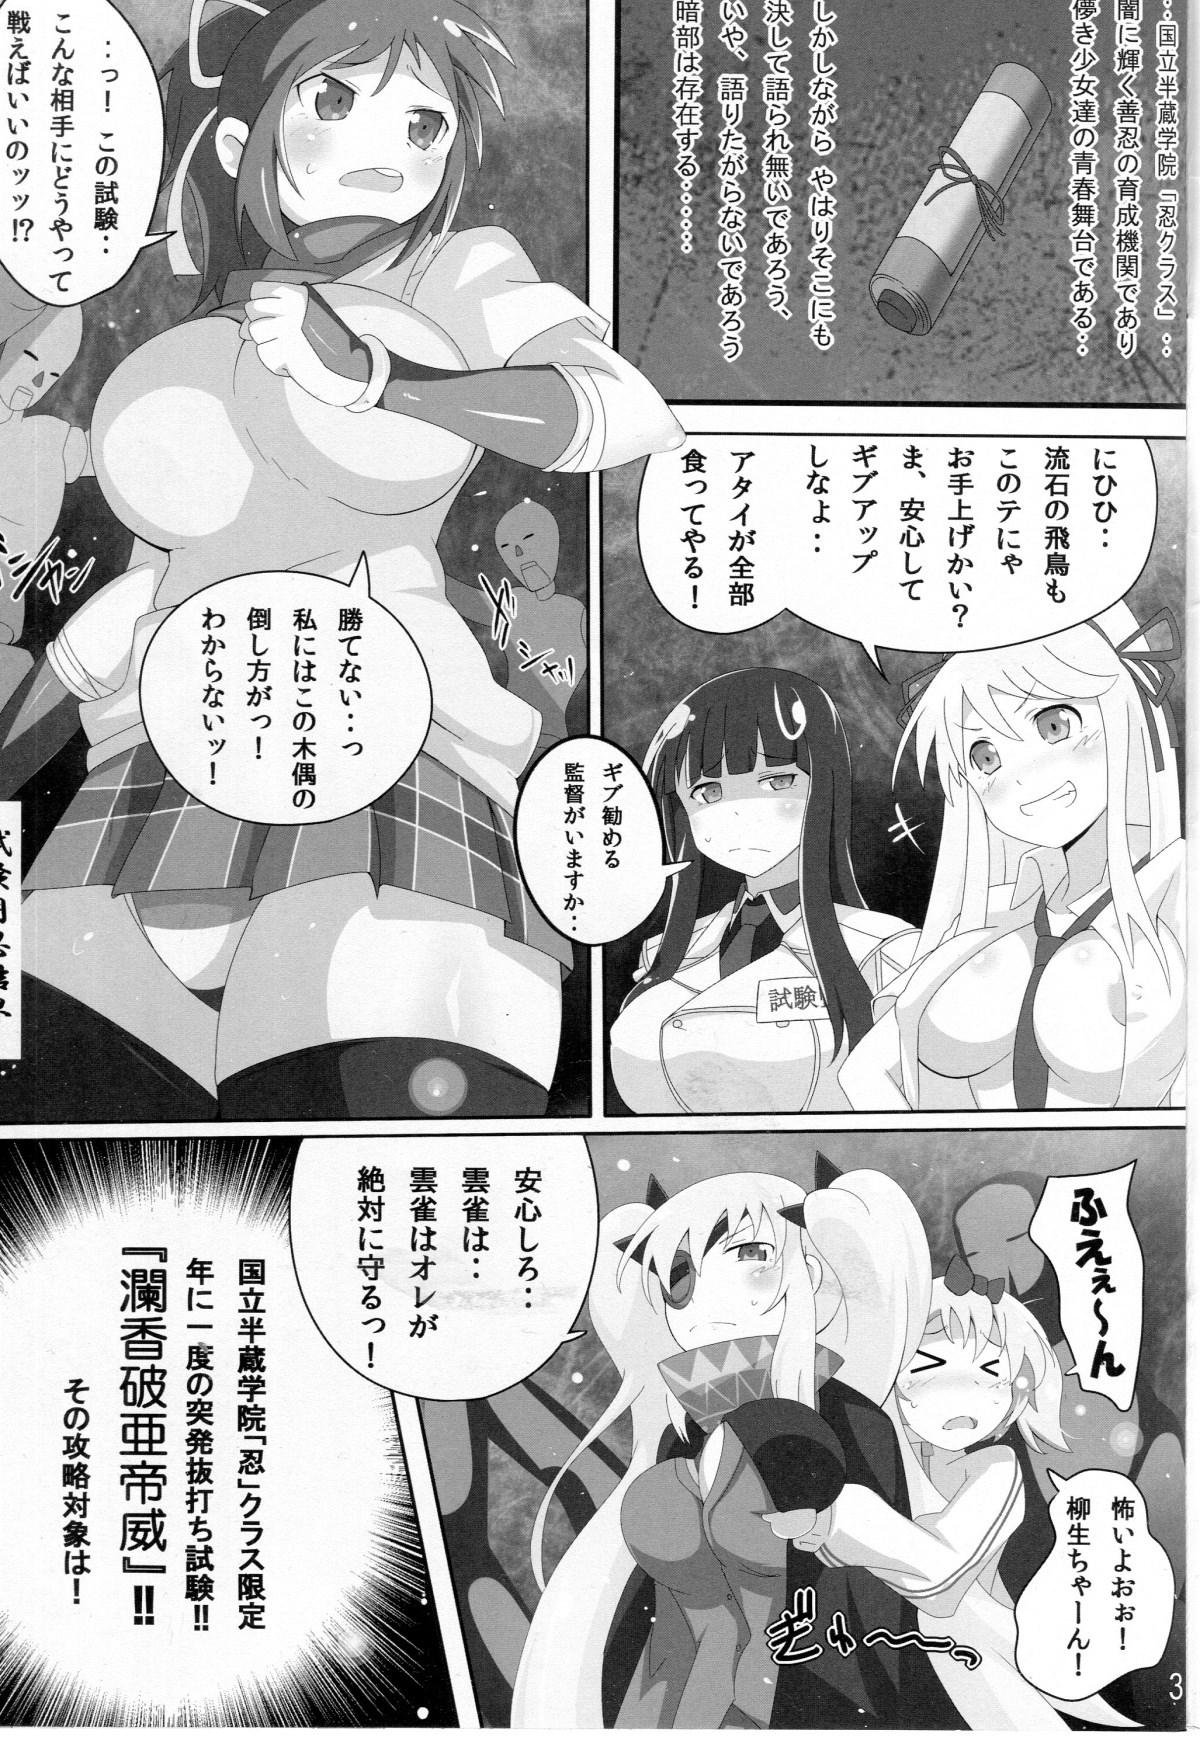 Oral Sex Kagura In The Dead - Senran kagura Room - Page 2